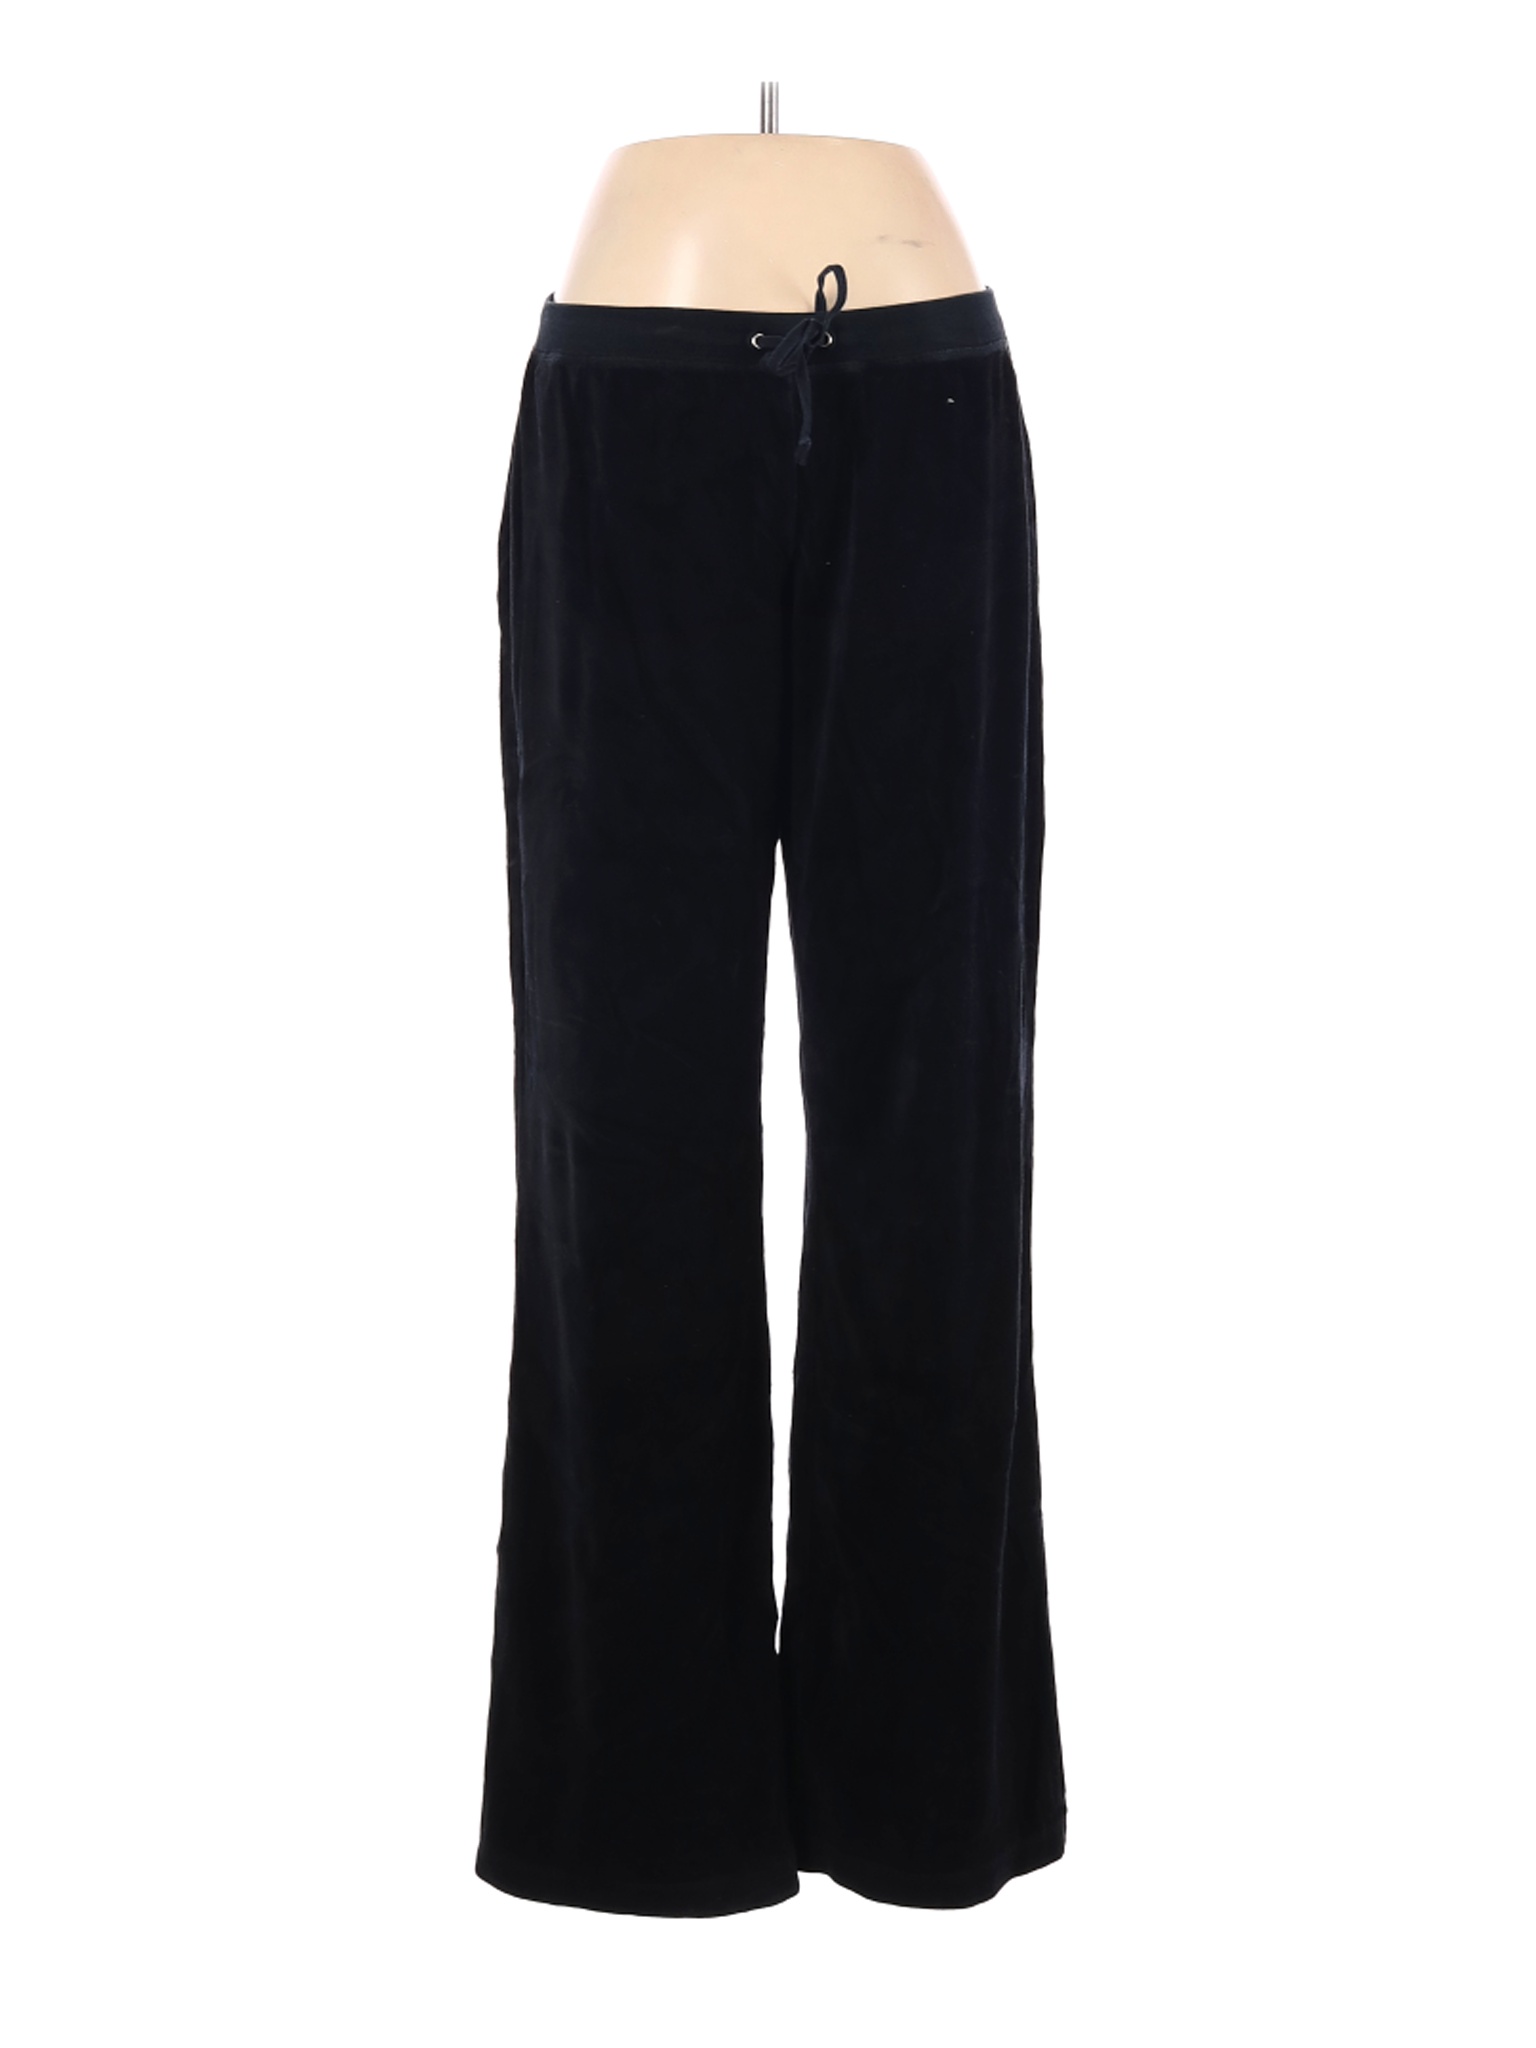 Moda International Women Black Velour Pants M | eBay